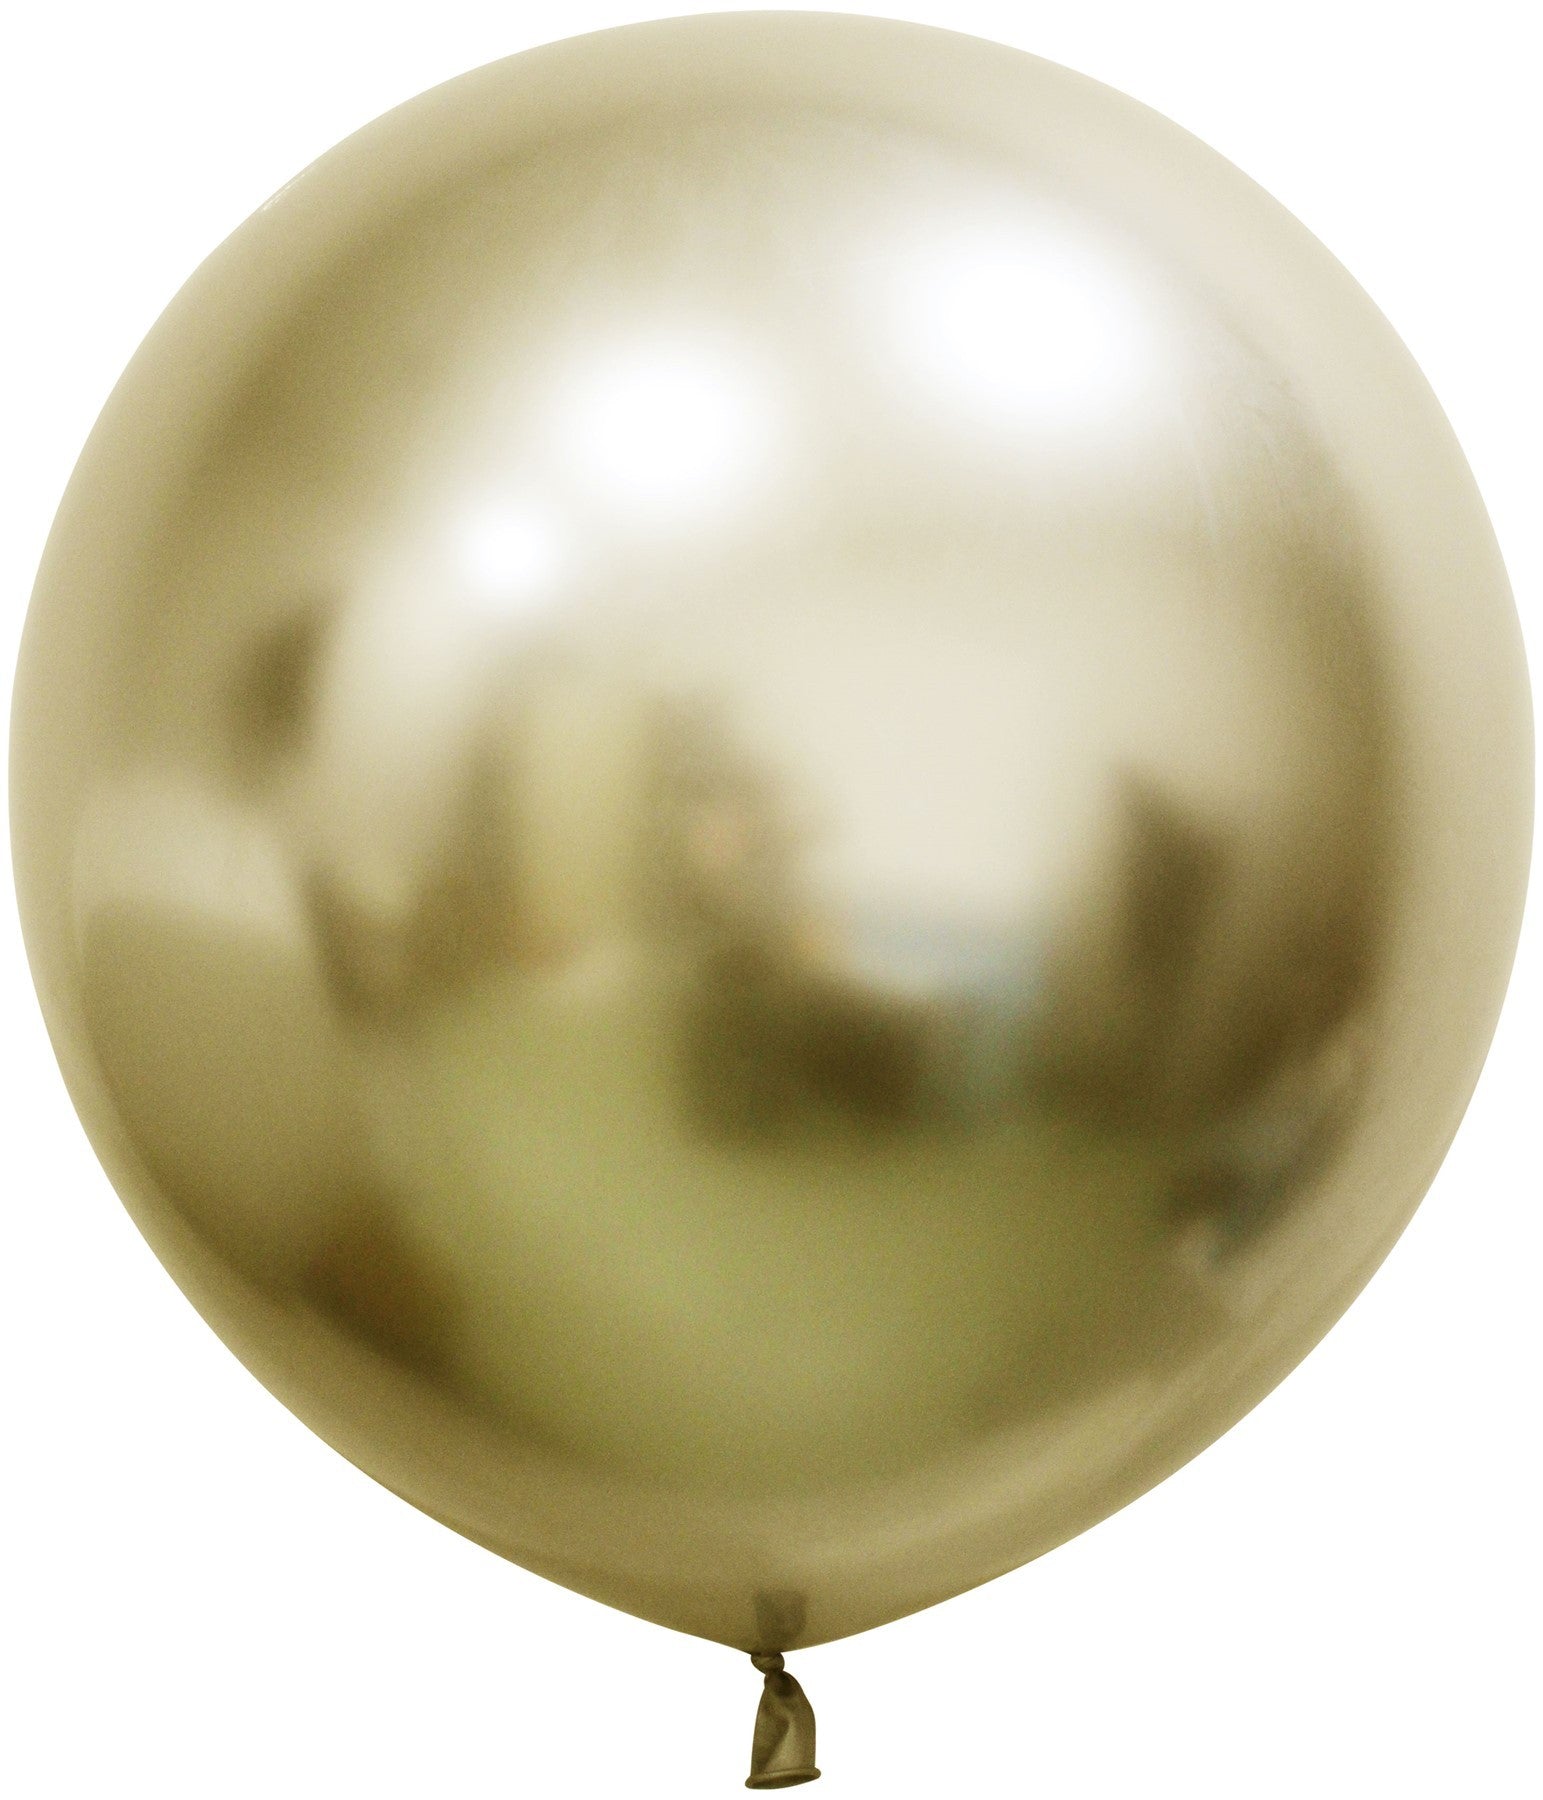 View Gold Chrome Jumbo Latex Balloon 24 inch Pk 3 information